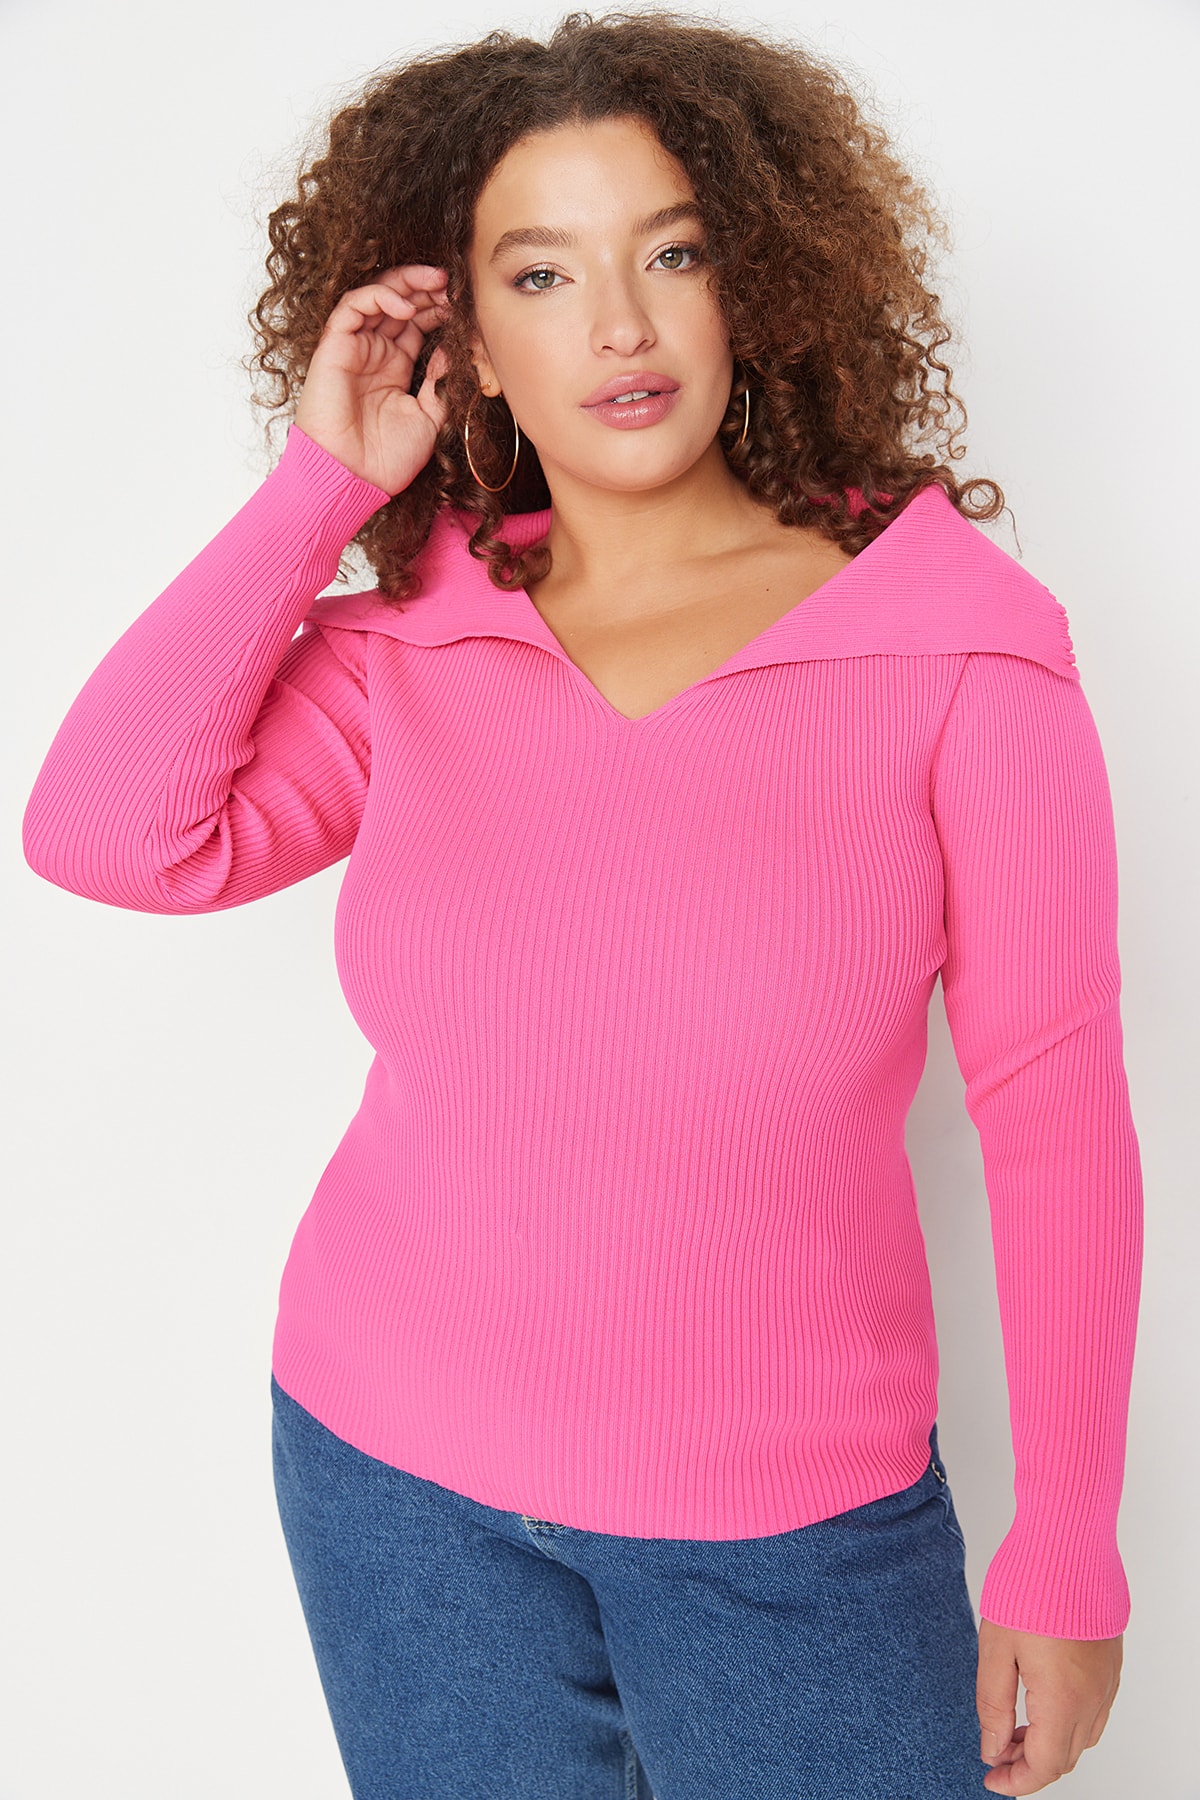 Трикотажная блузка цвета фуксии с вырезом «лодочка» Trendyol, розовый